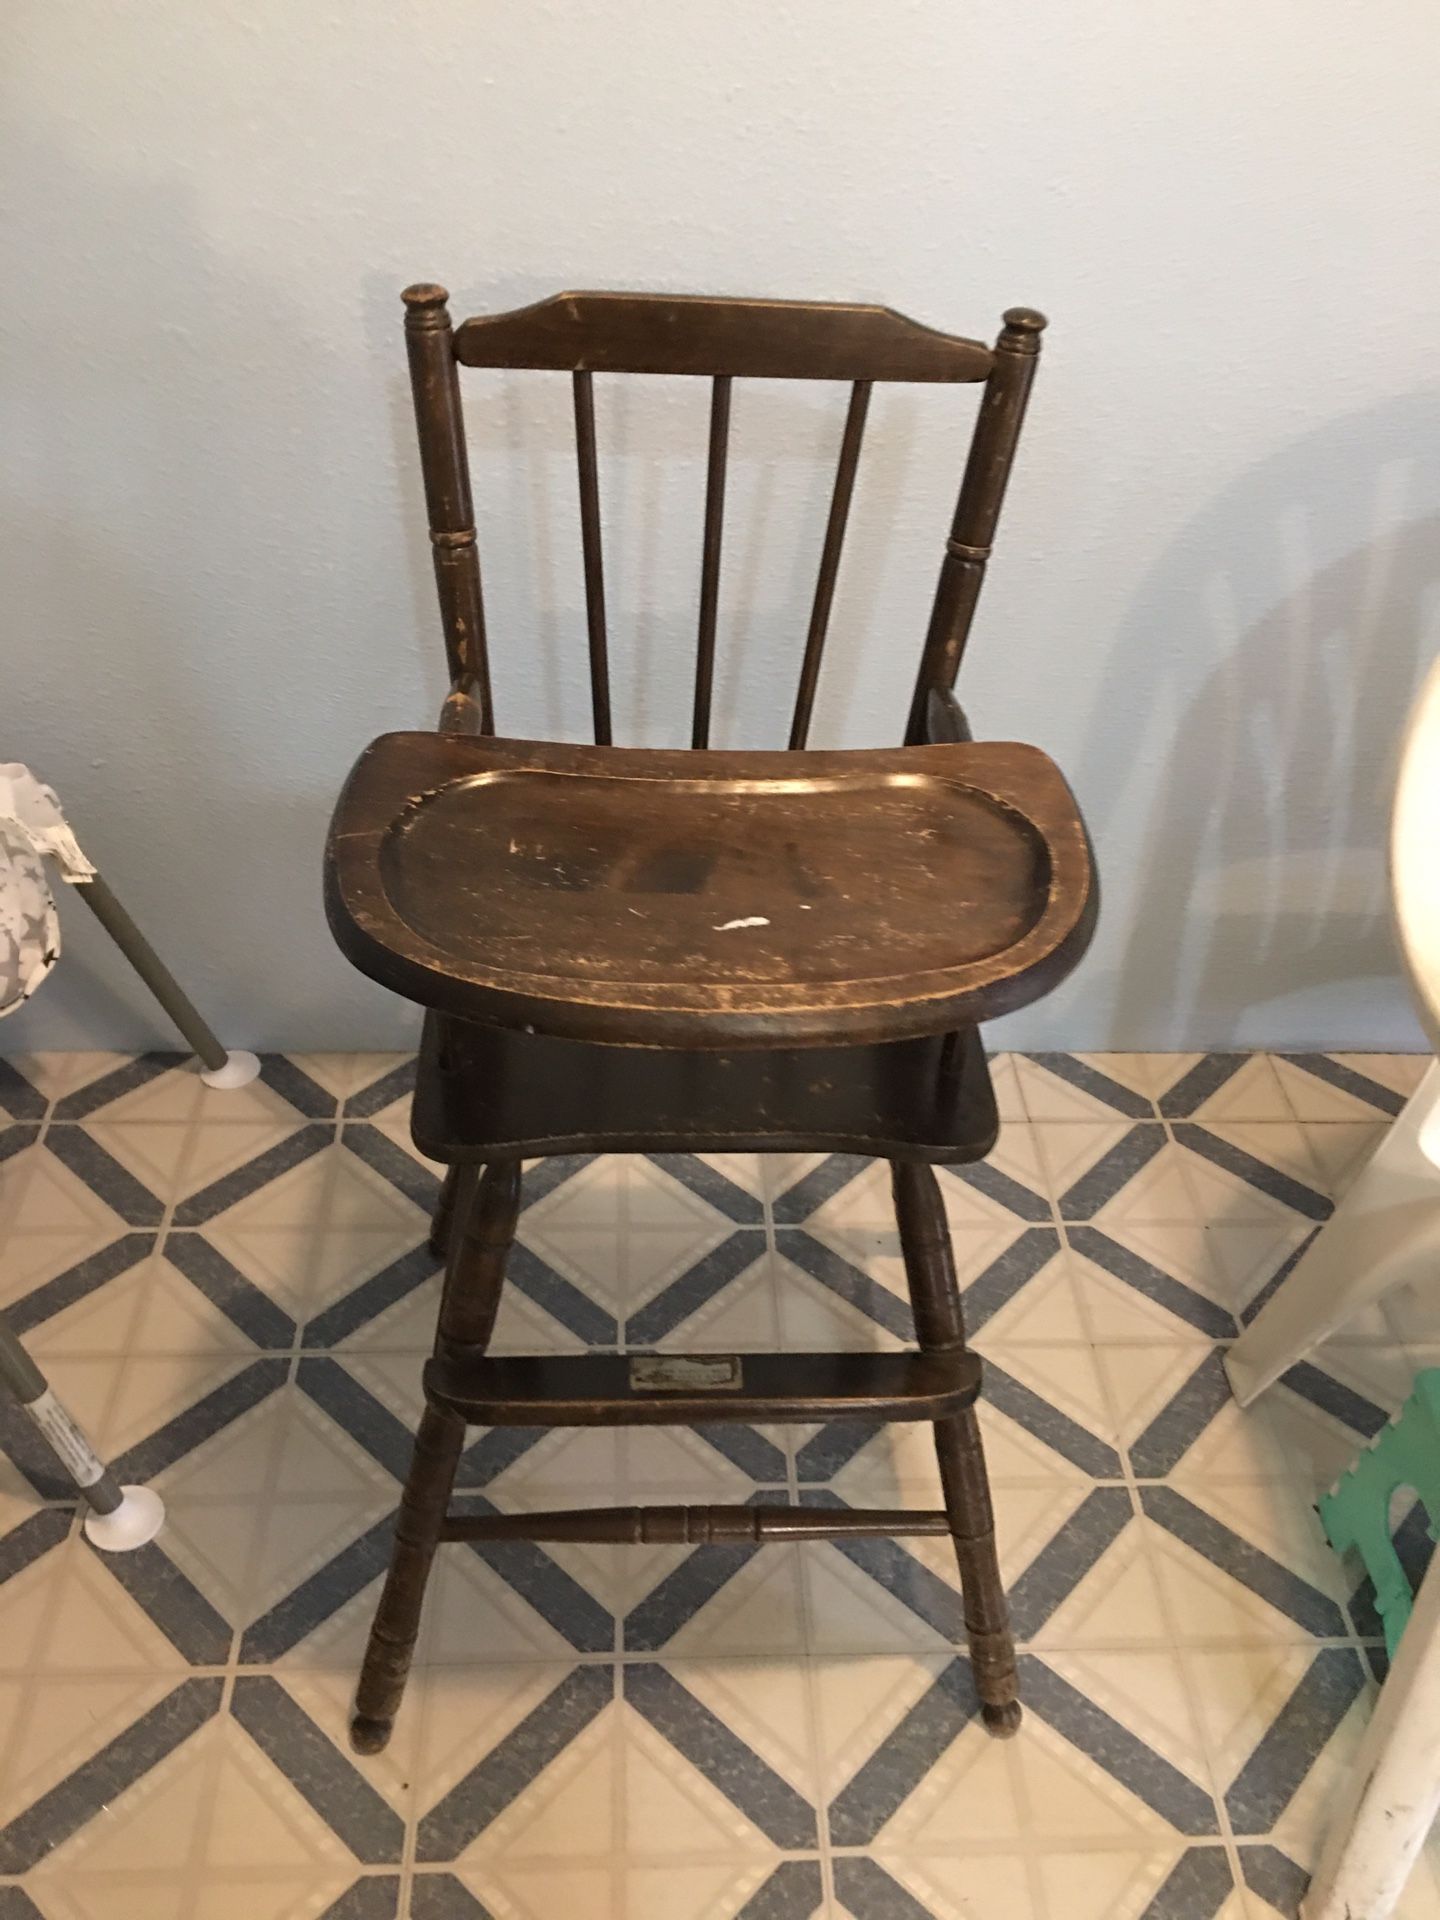 Old fashion high chair wood